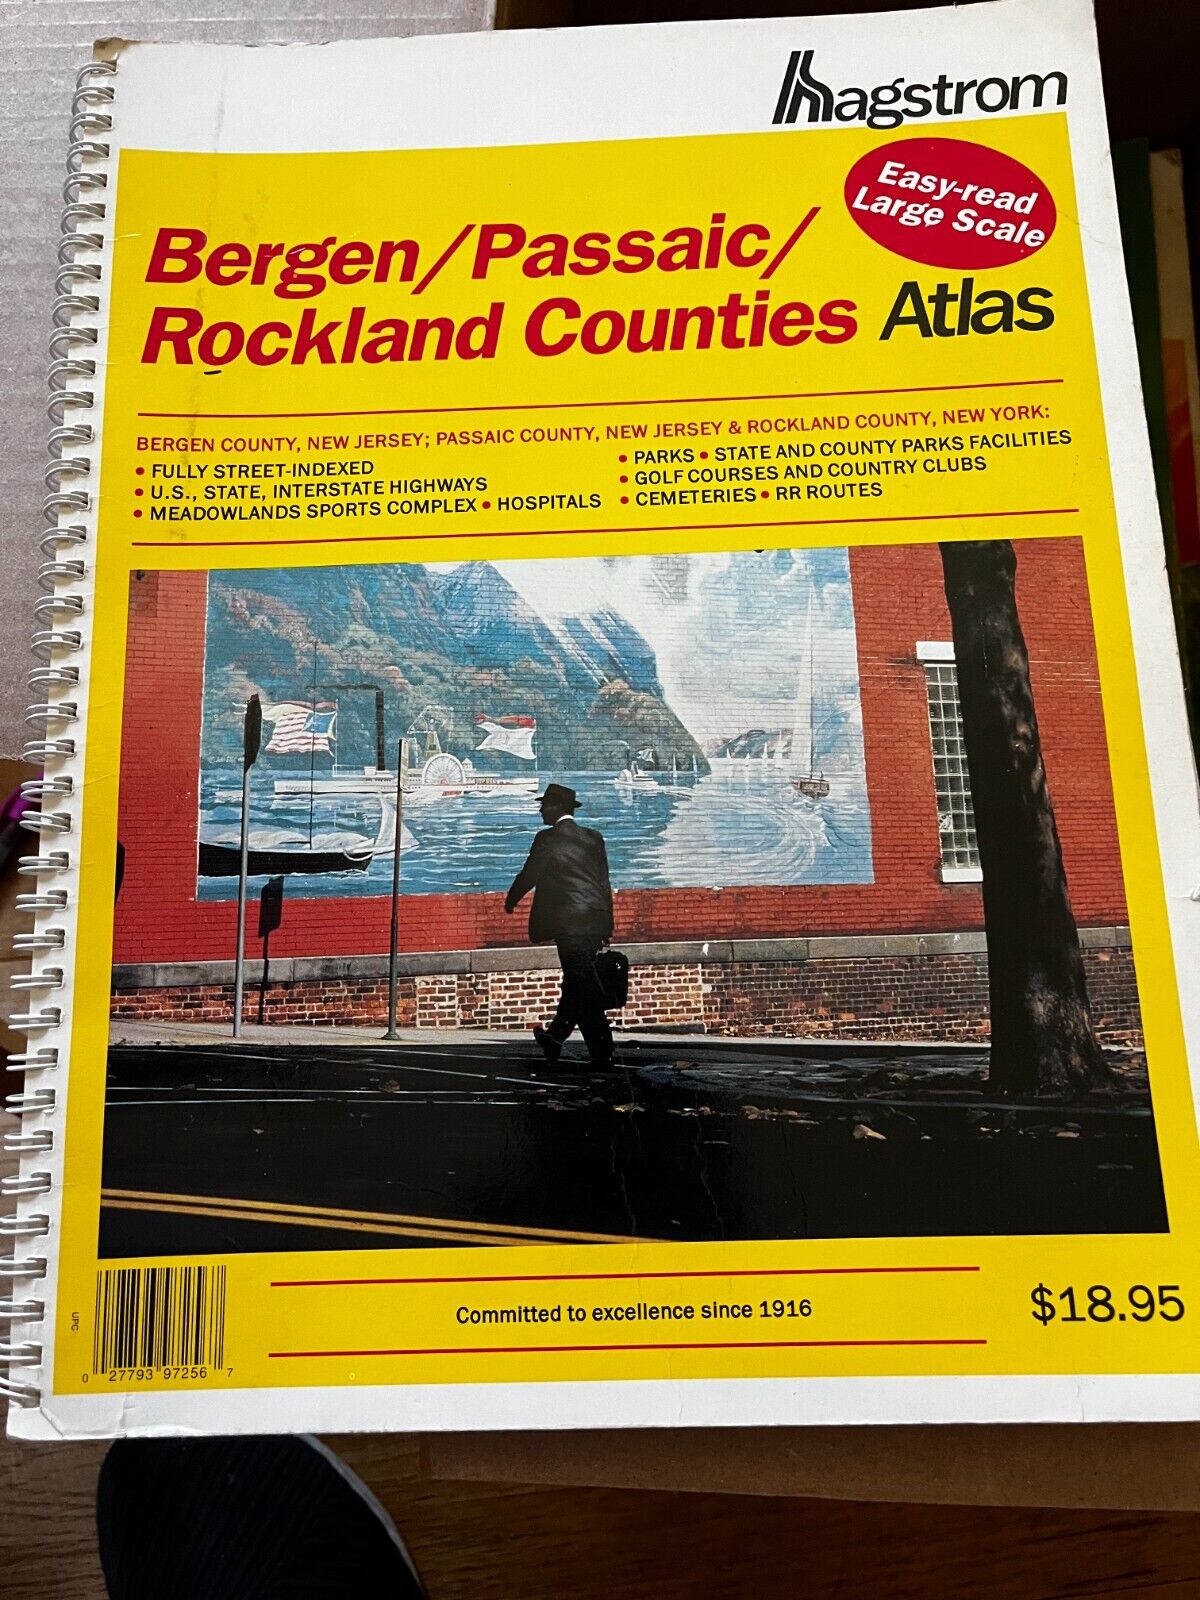 Hagstrom - Large Scale Atlas (1984) - Bergen / Passaic NJ - Rockland NY